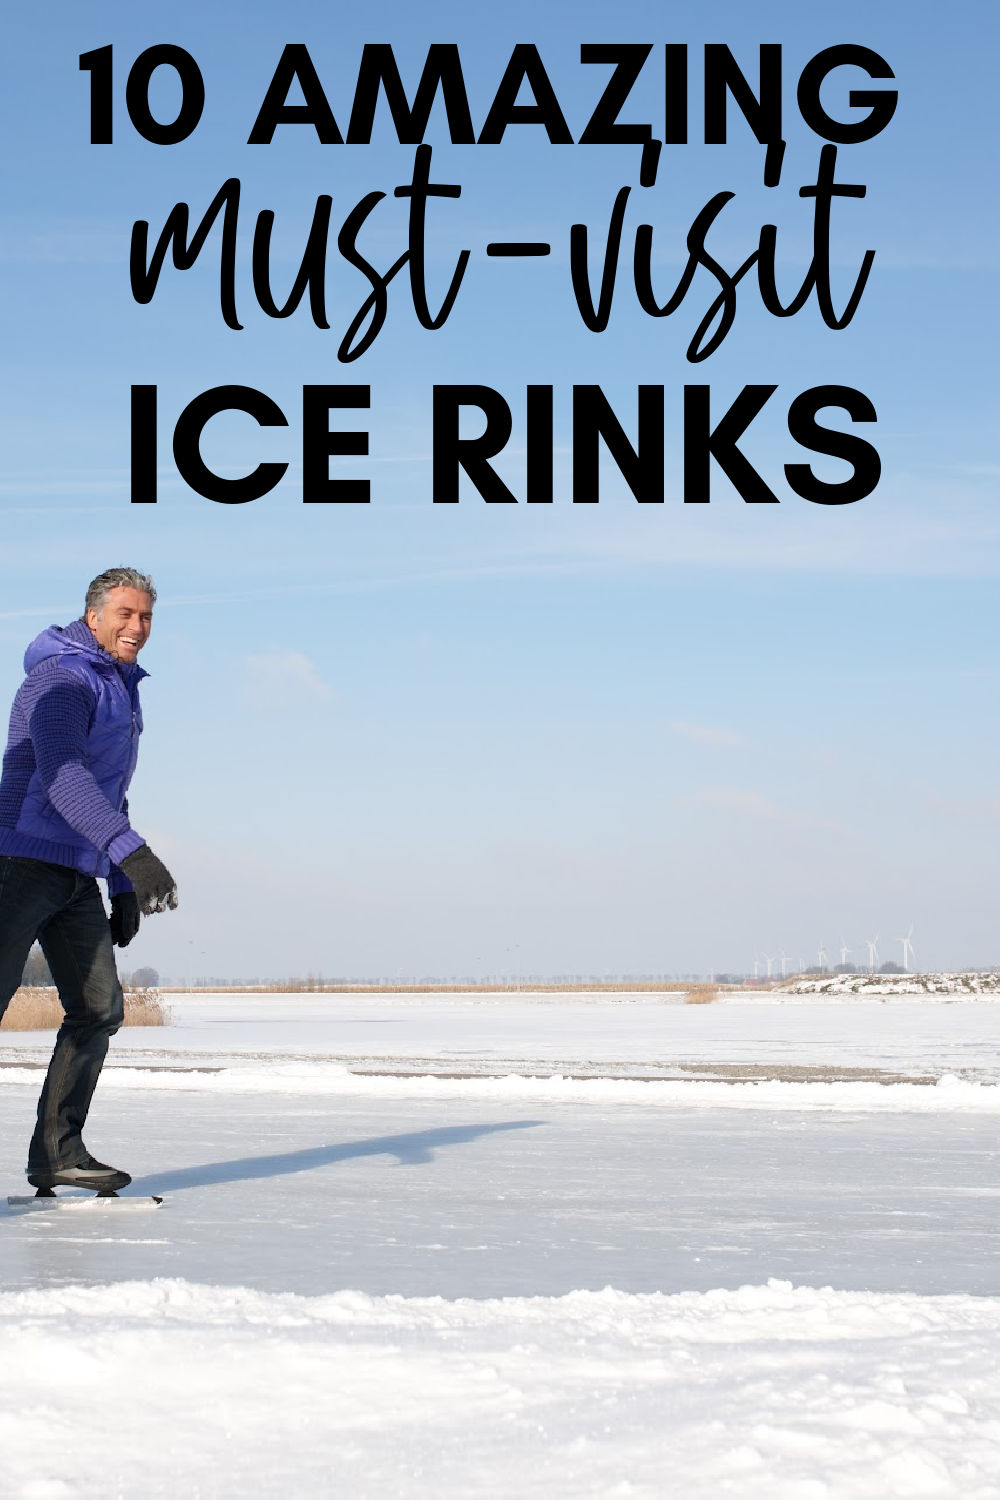 Must-visit ice skating rinks